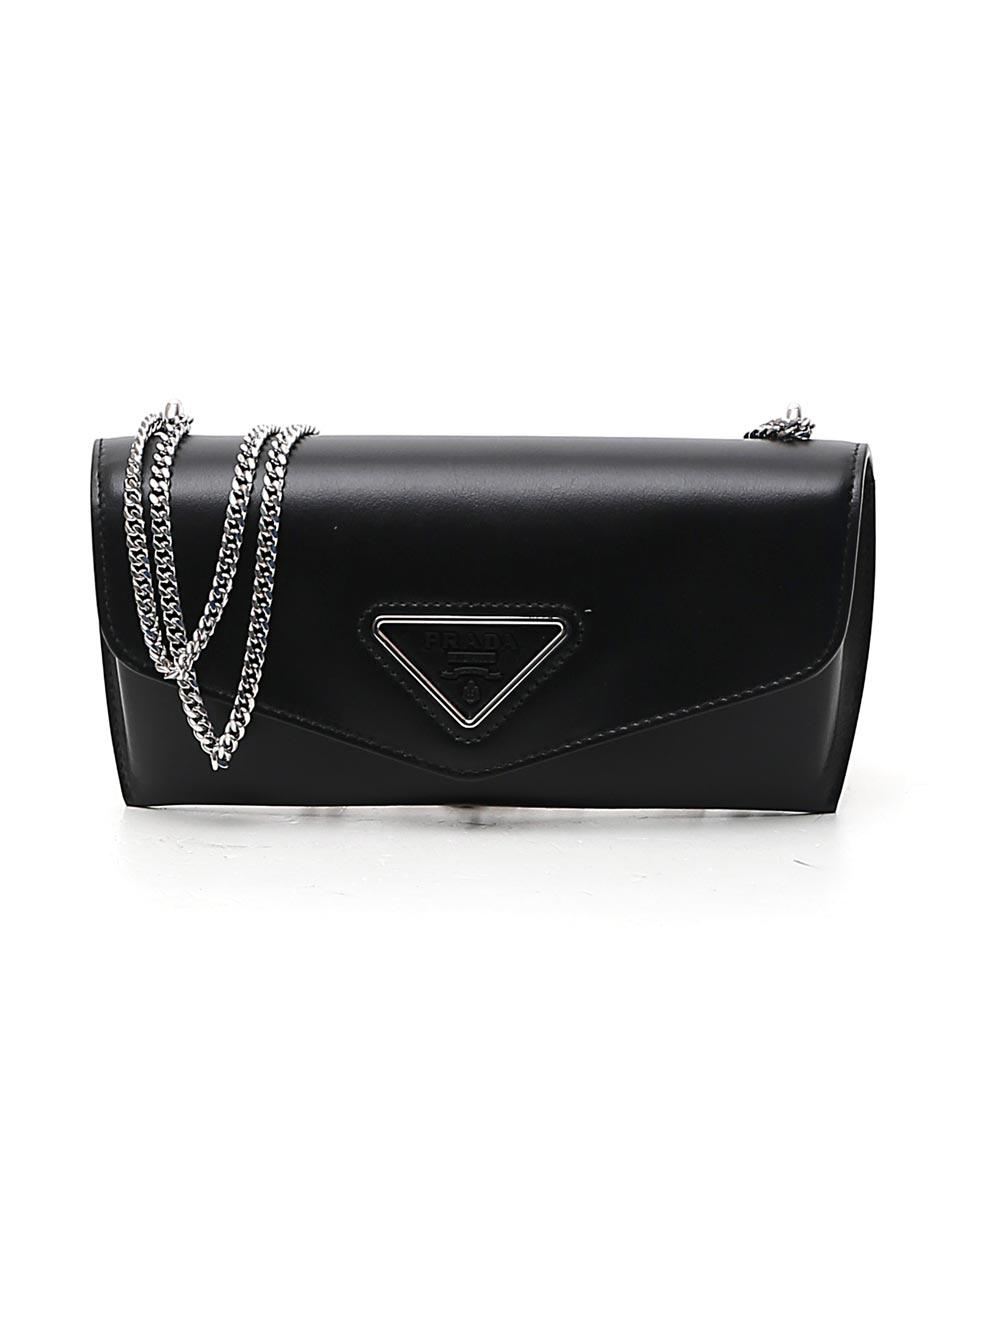 Prada Strapped Envelope Clutch Bag in Black | Lyst